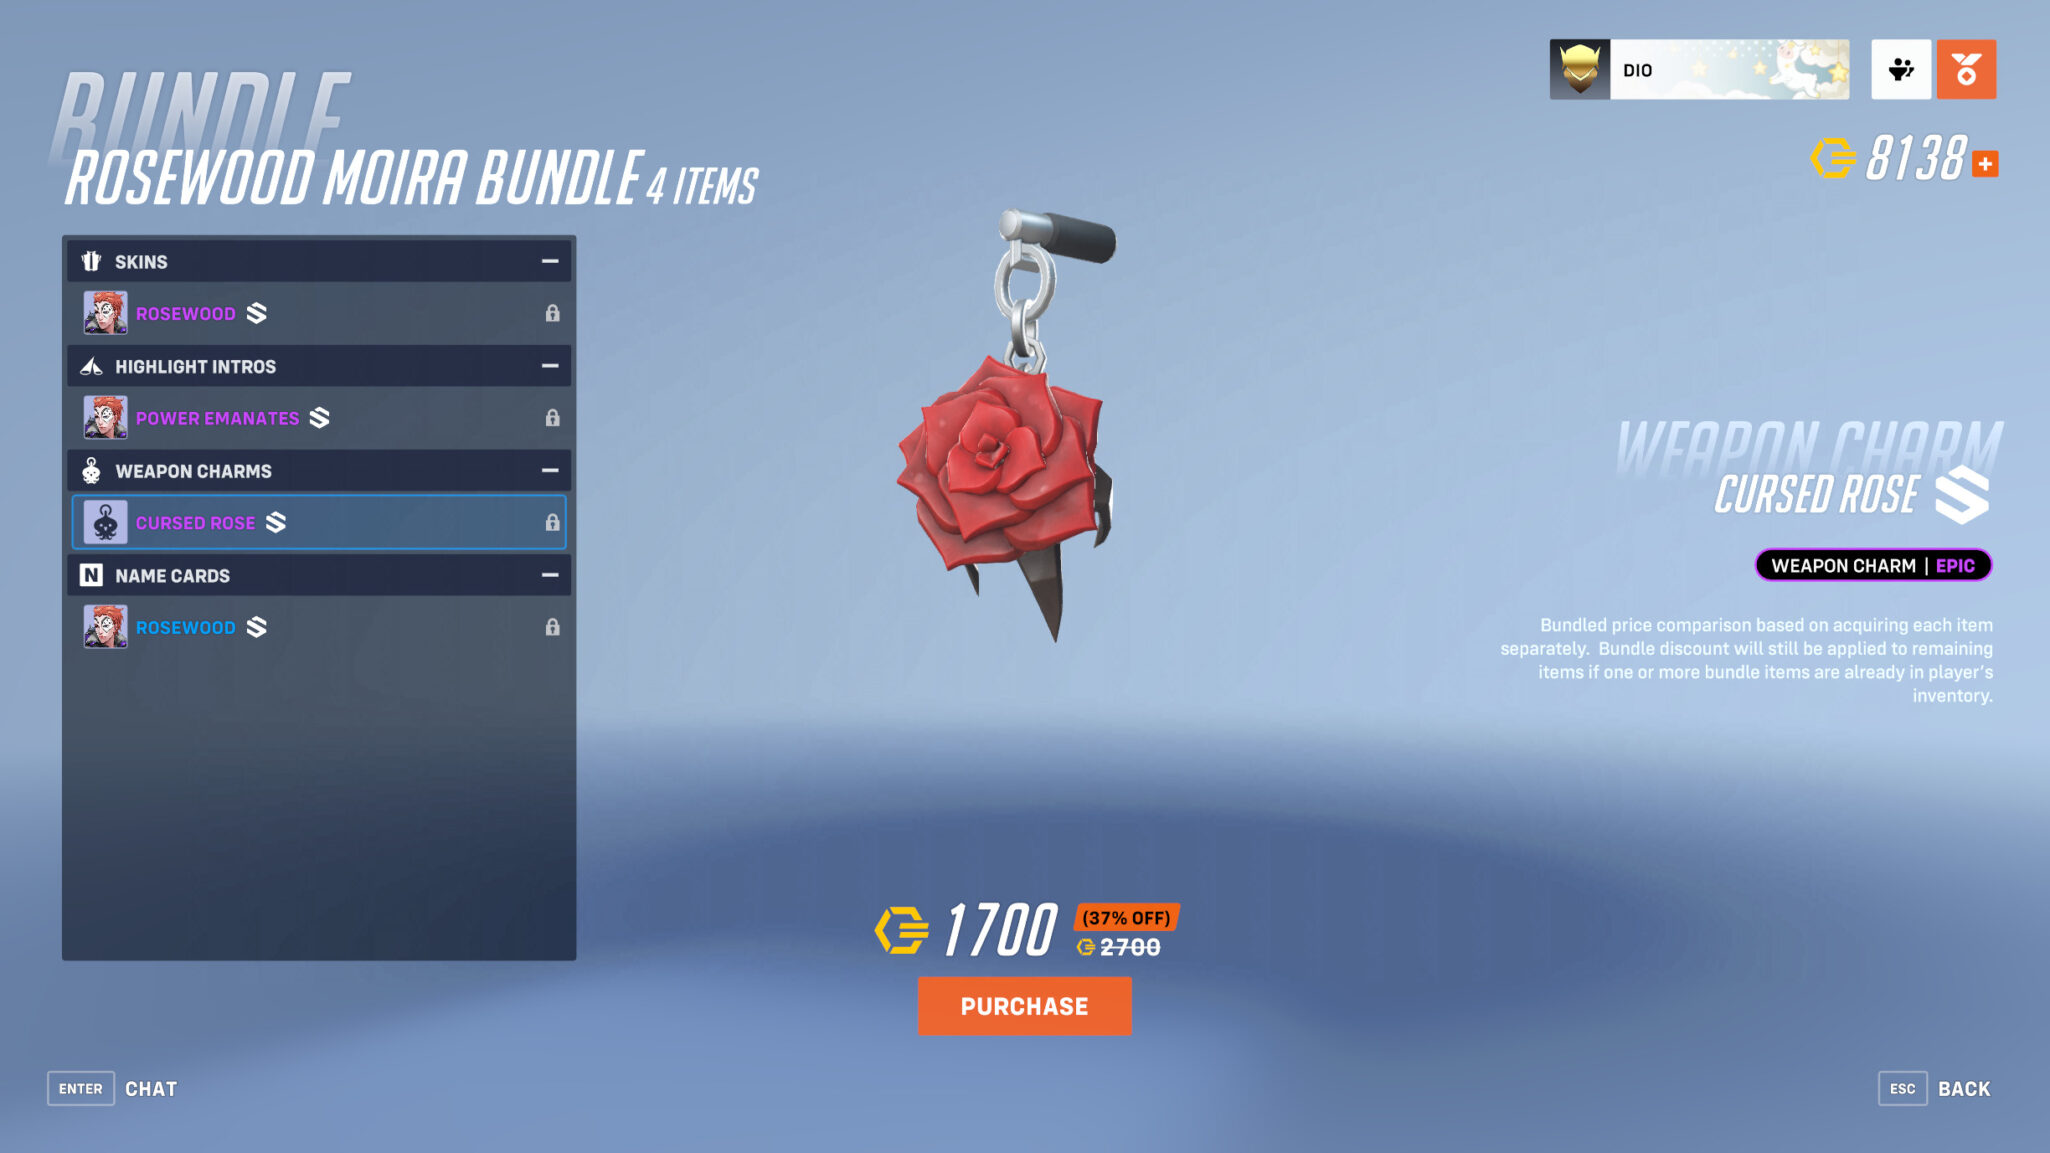 Cursed Rose weapon charm (Image via Blizzard Entertainment)